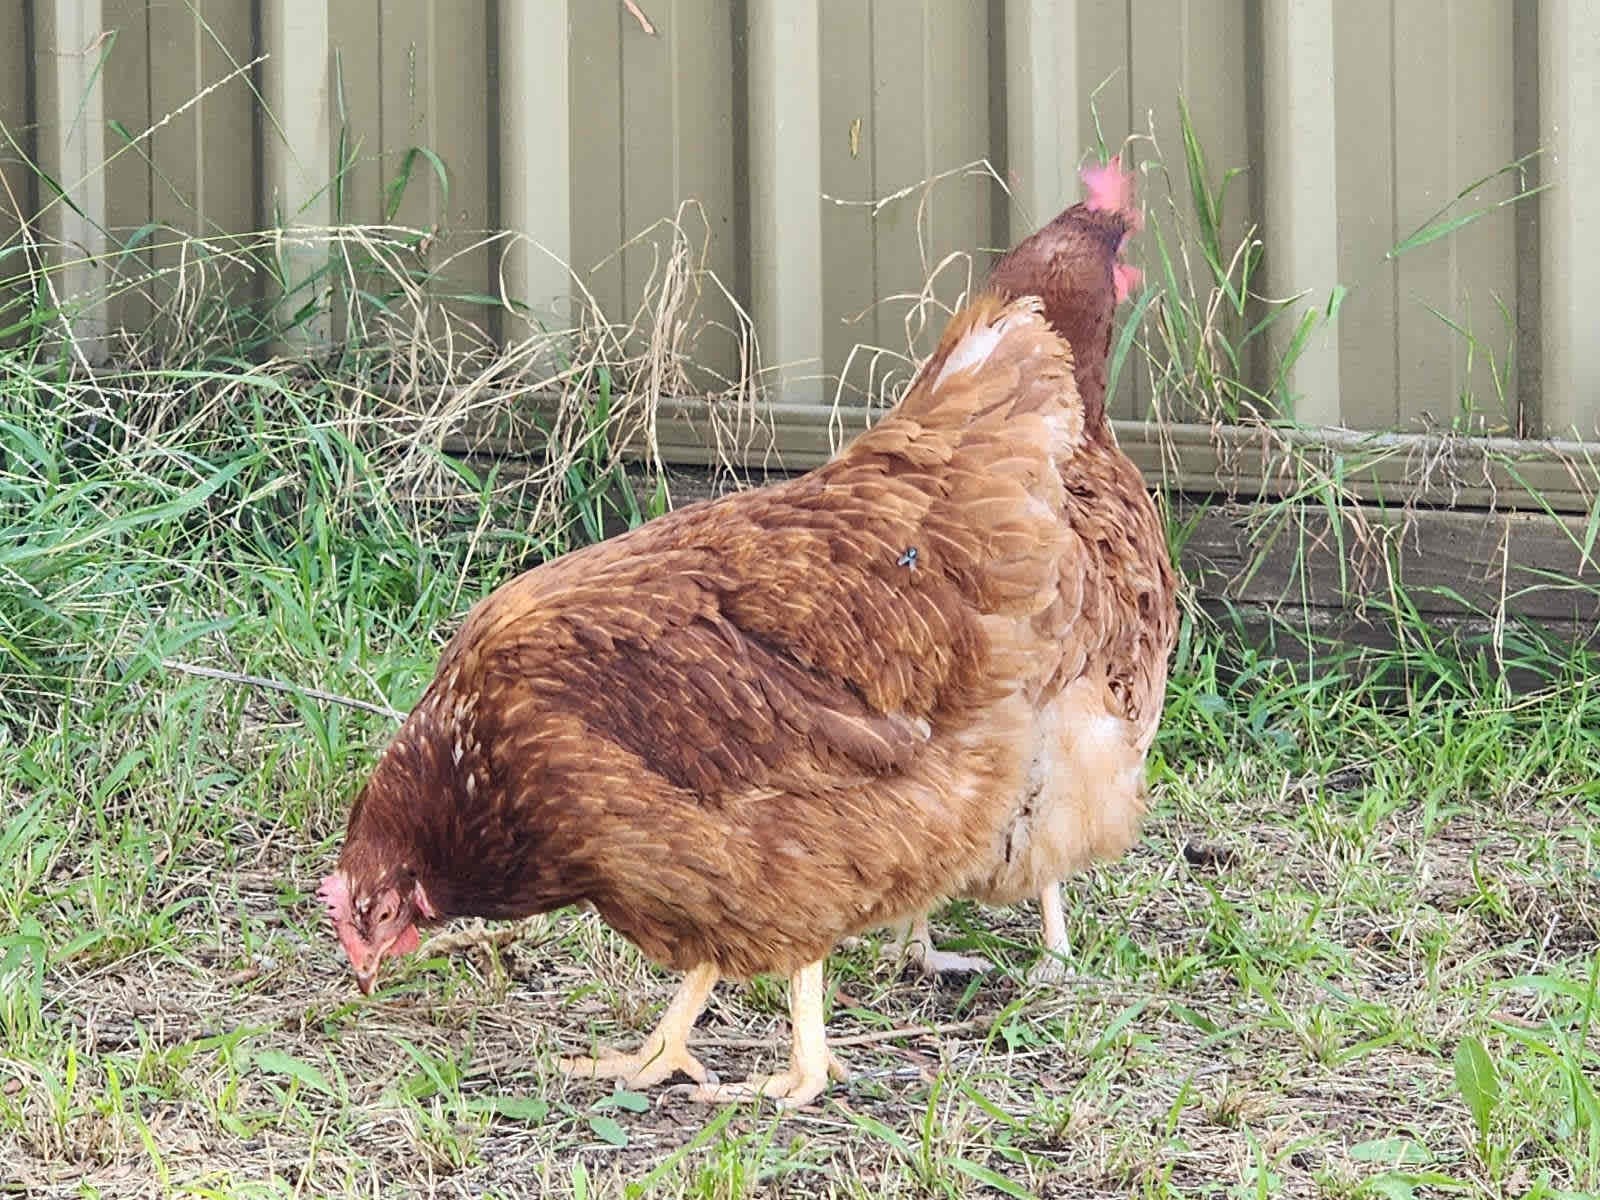 Blue partridge Brahma rooster, Livestock, Gumtree Australia Penrith Area  - Orchard Hills